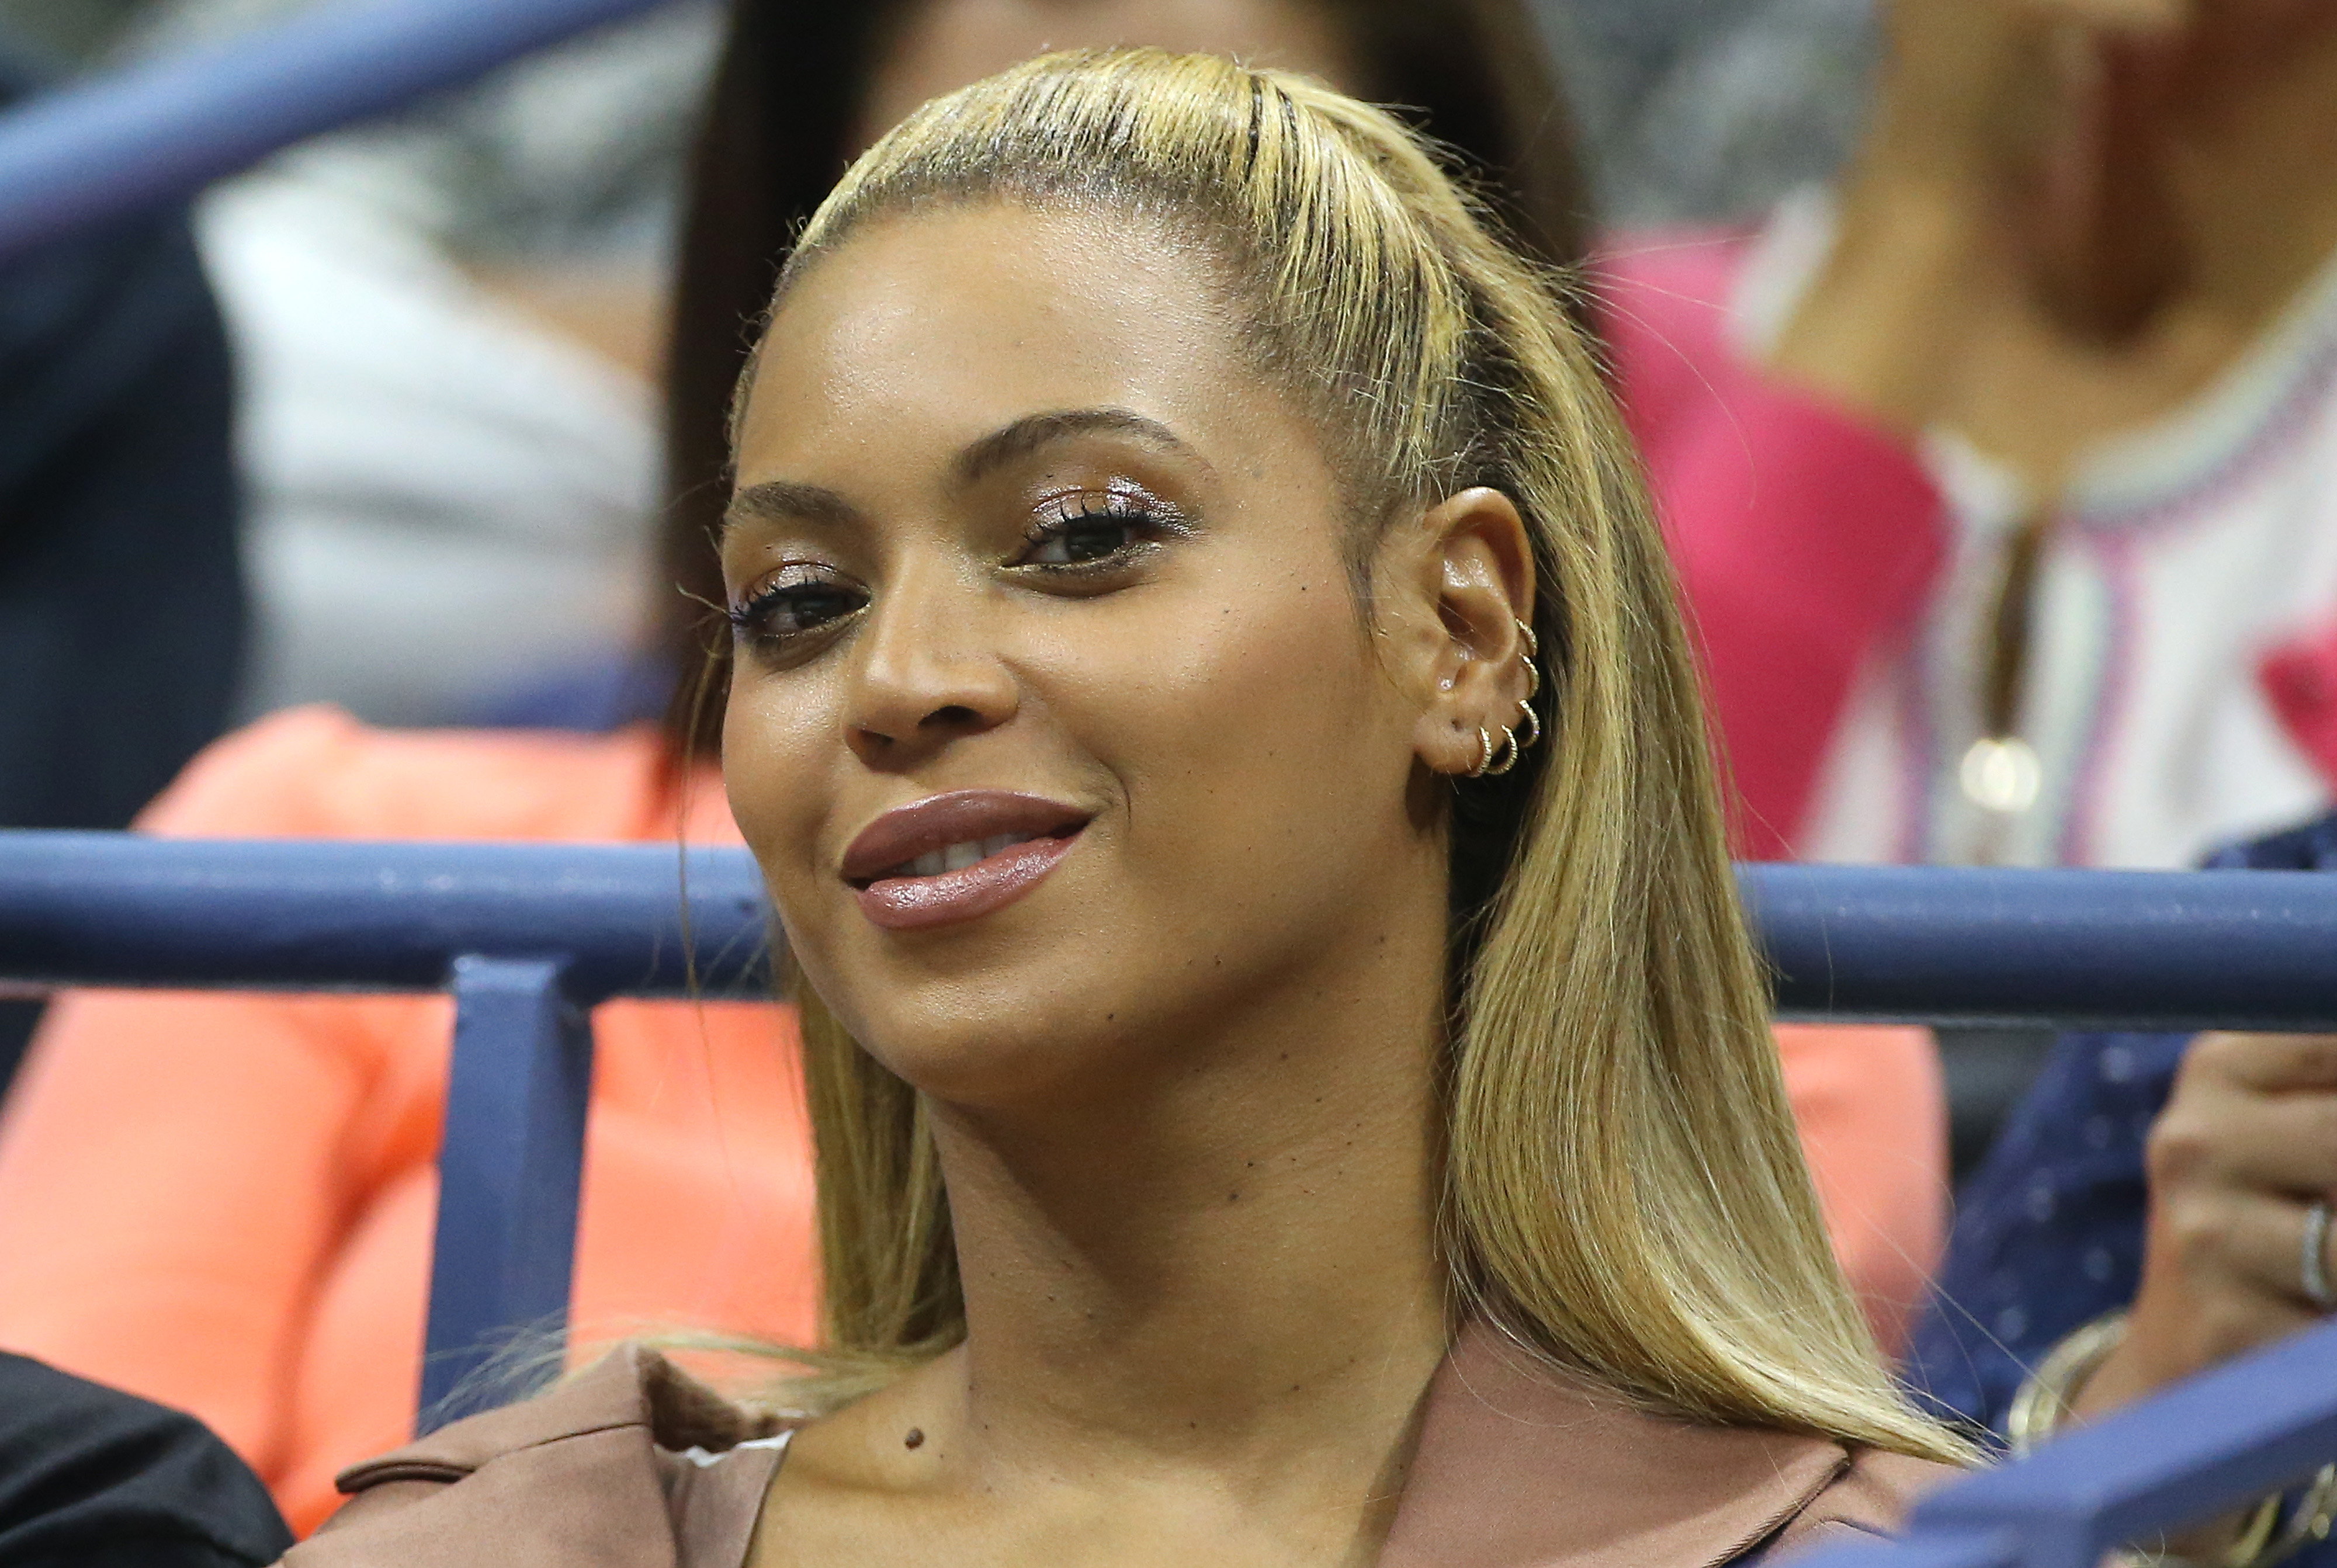 Beyoncé at a sporting event